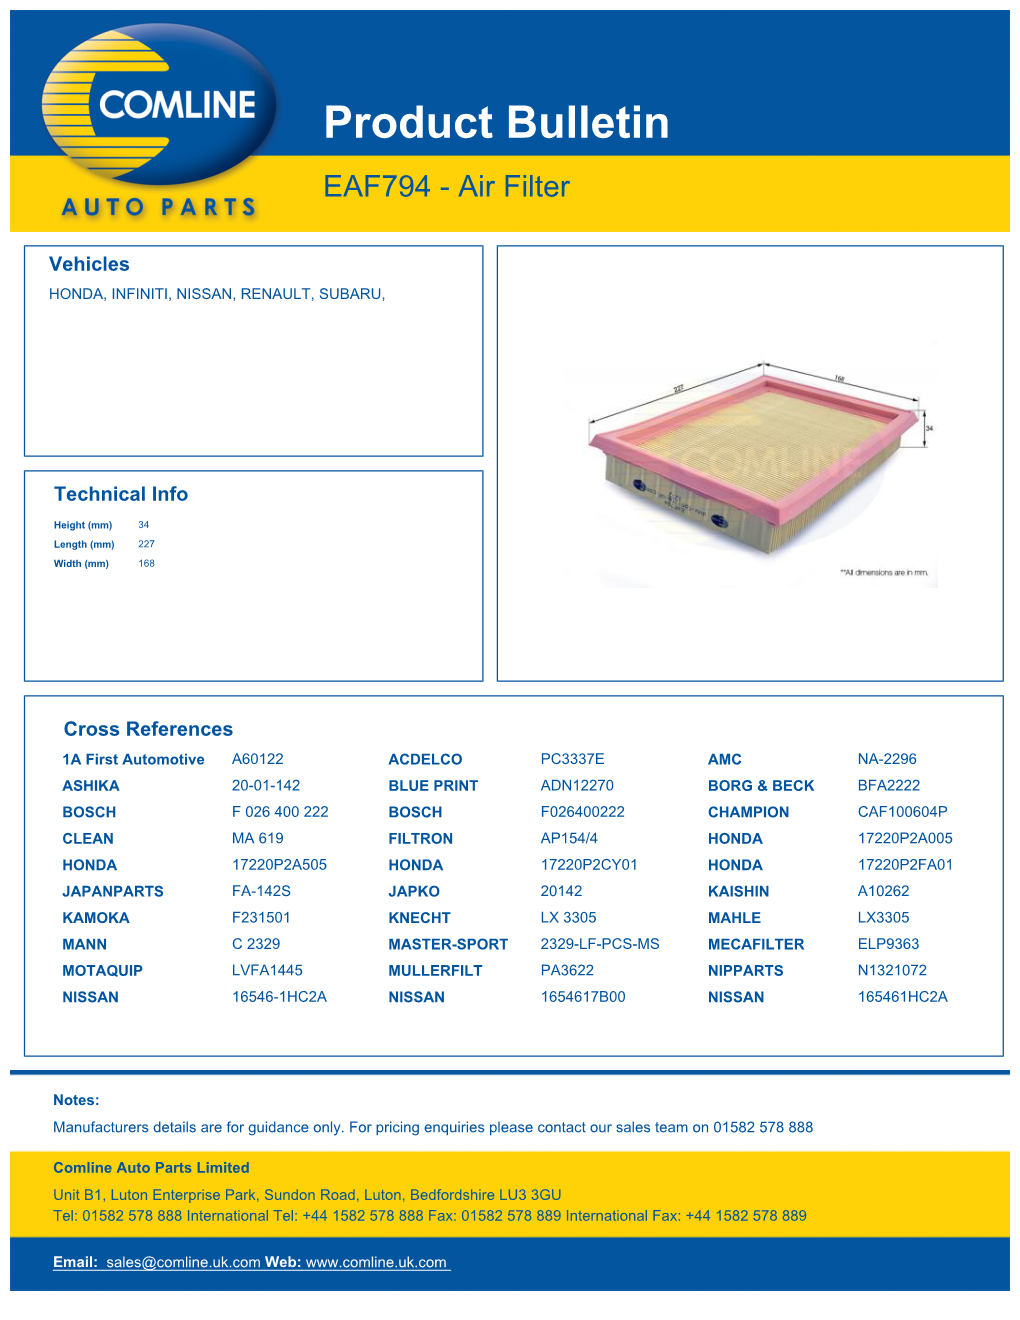 Product Bulletin EAF794 - Air Filter